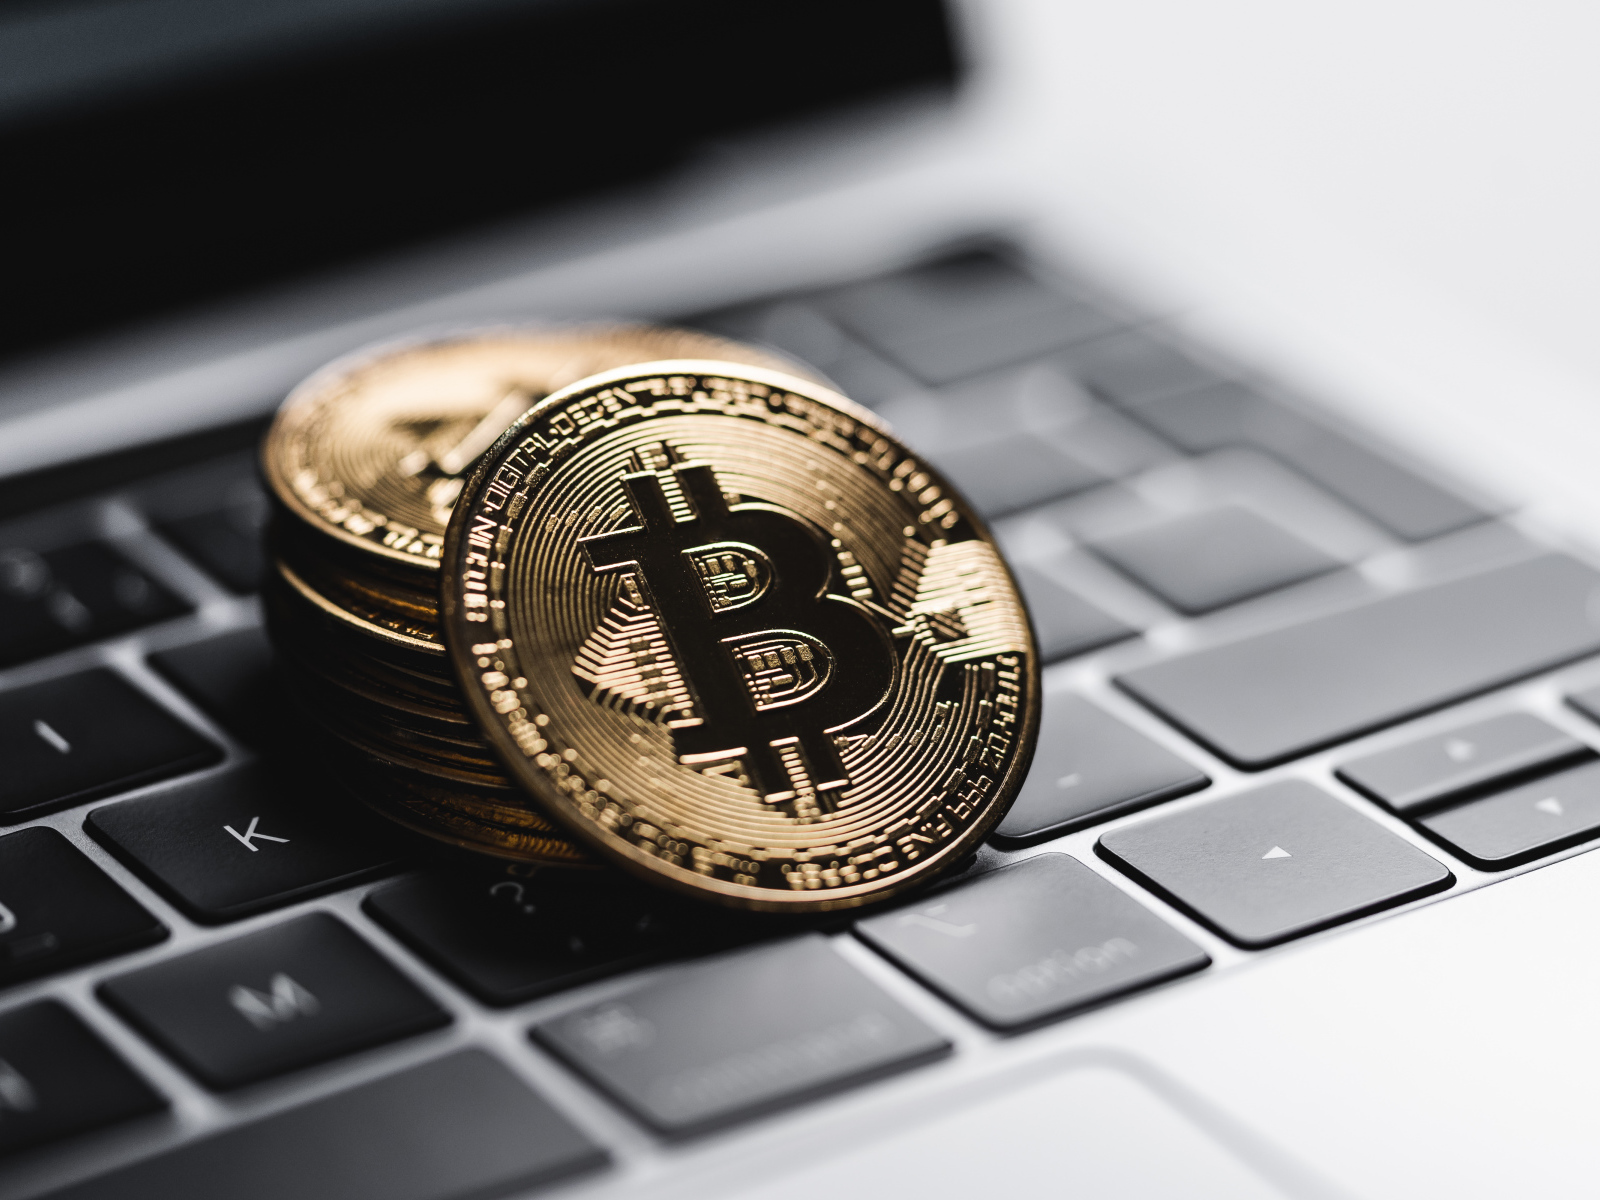 Bitcoin coins lie on a laptop keyboard